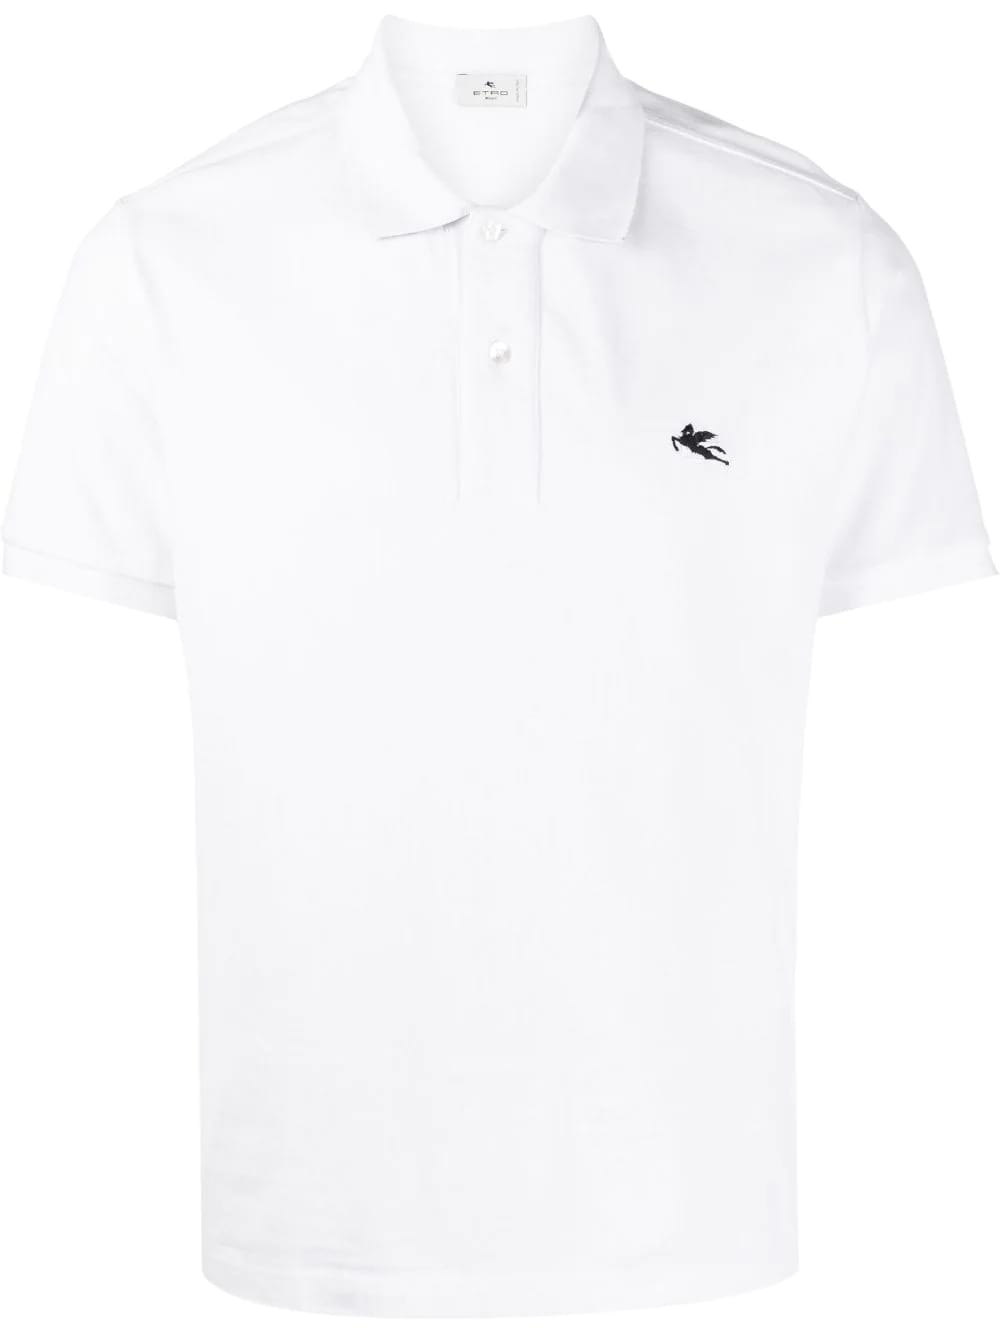 Etro Man Short Sleeve Polo Shirt In White Piquet With Black Pegasus Embroidery